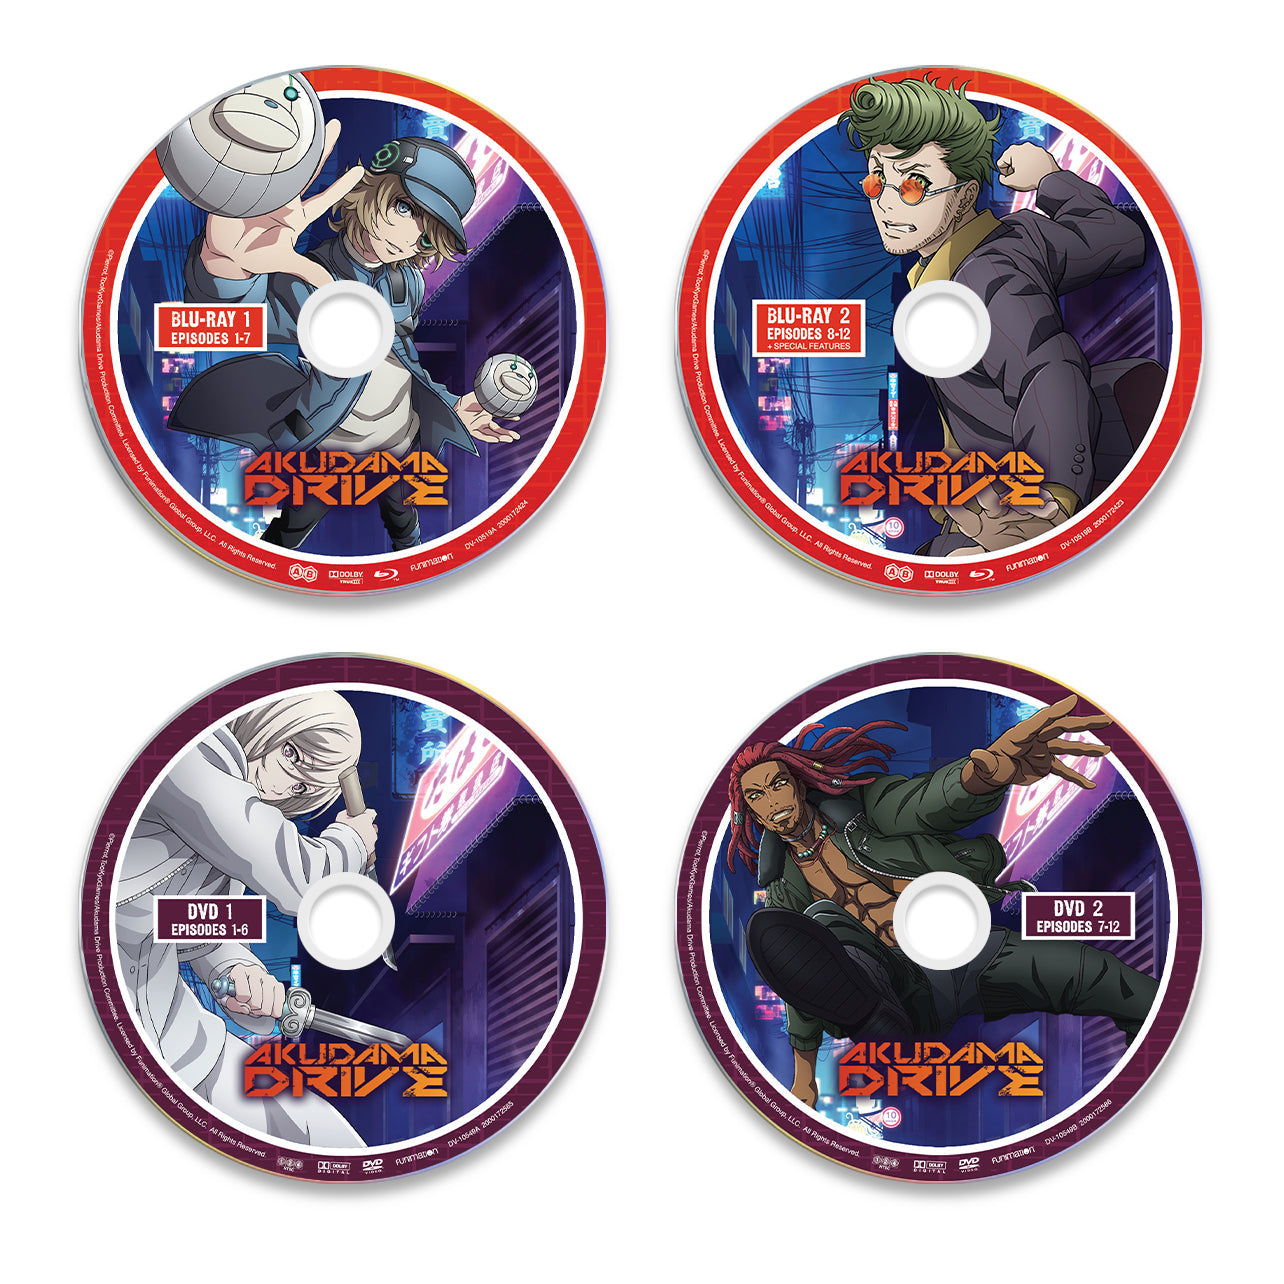 Akudama Drive - The Complete Season - Limited Edition - Blu-ray + DVD image count 3